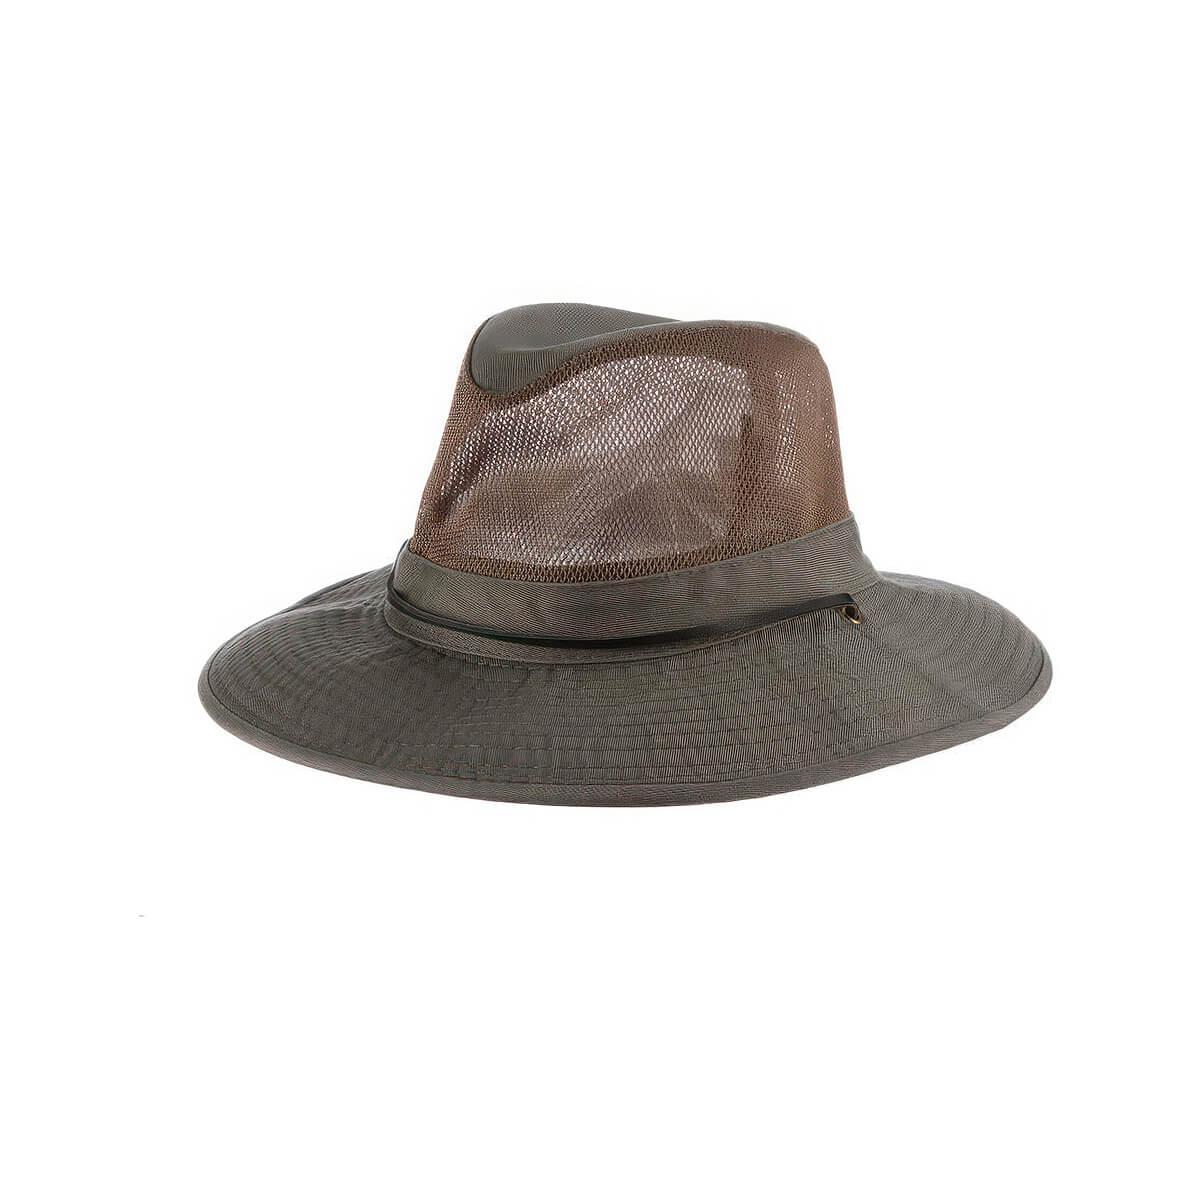  Men's Aspen Twill Safari Hat